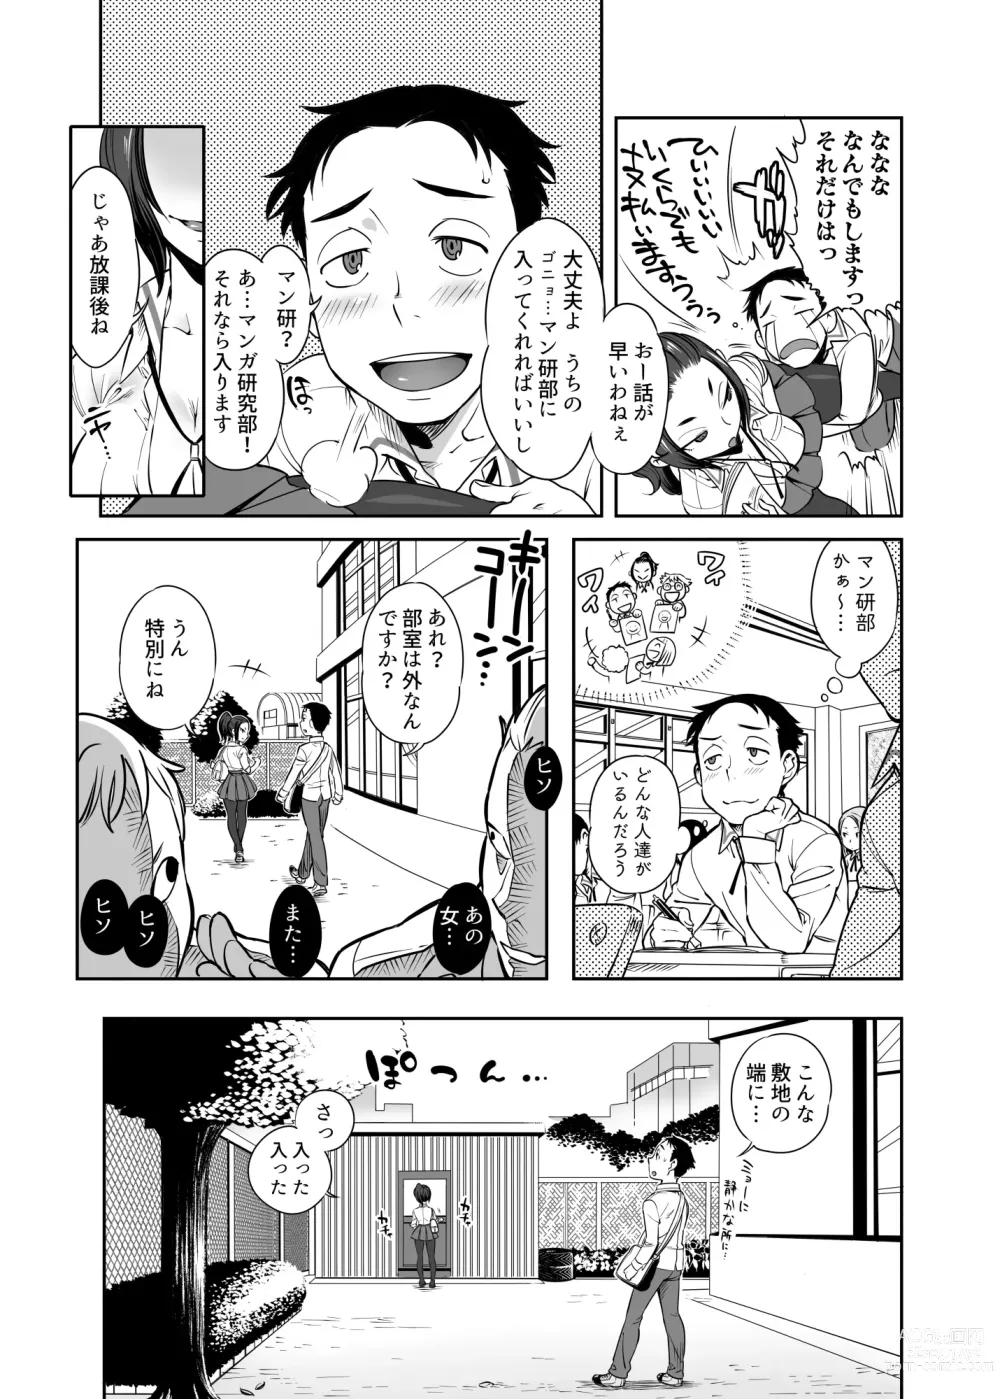 Page 7 of doujinshi URAMAN: Eromanga-bu e Youkoso